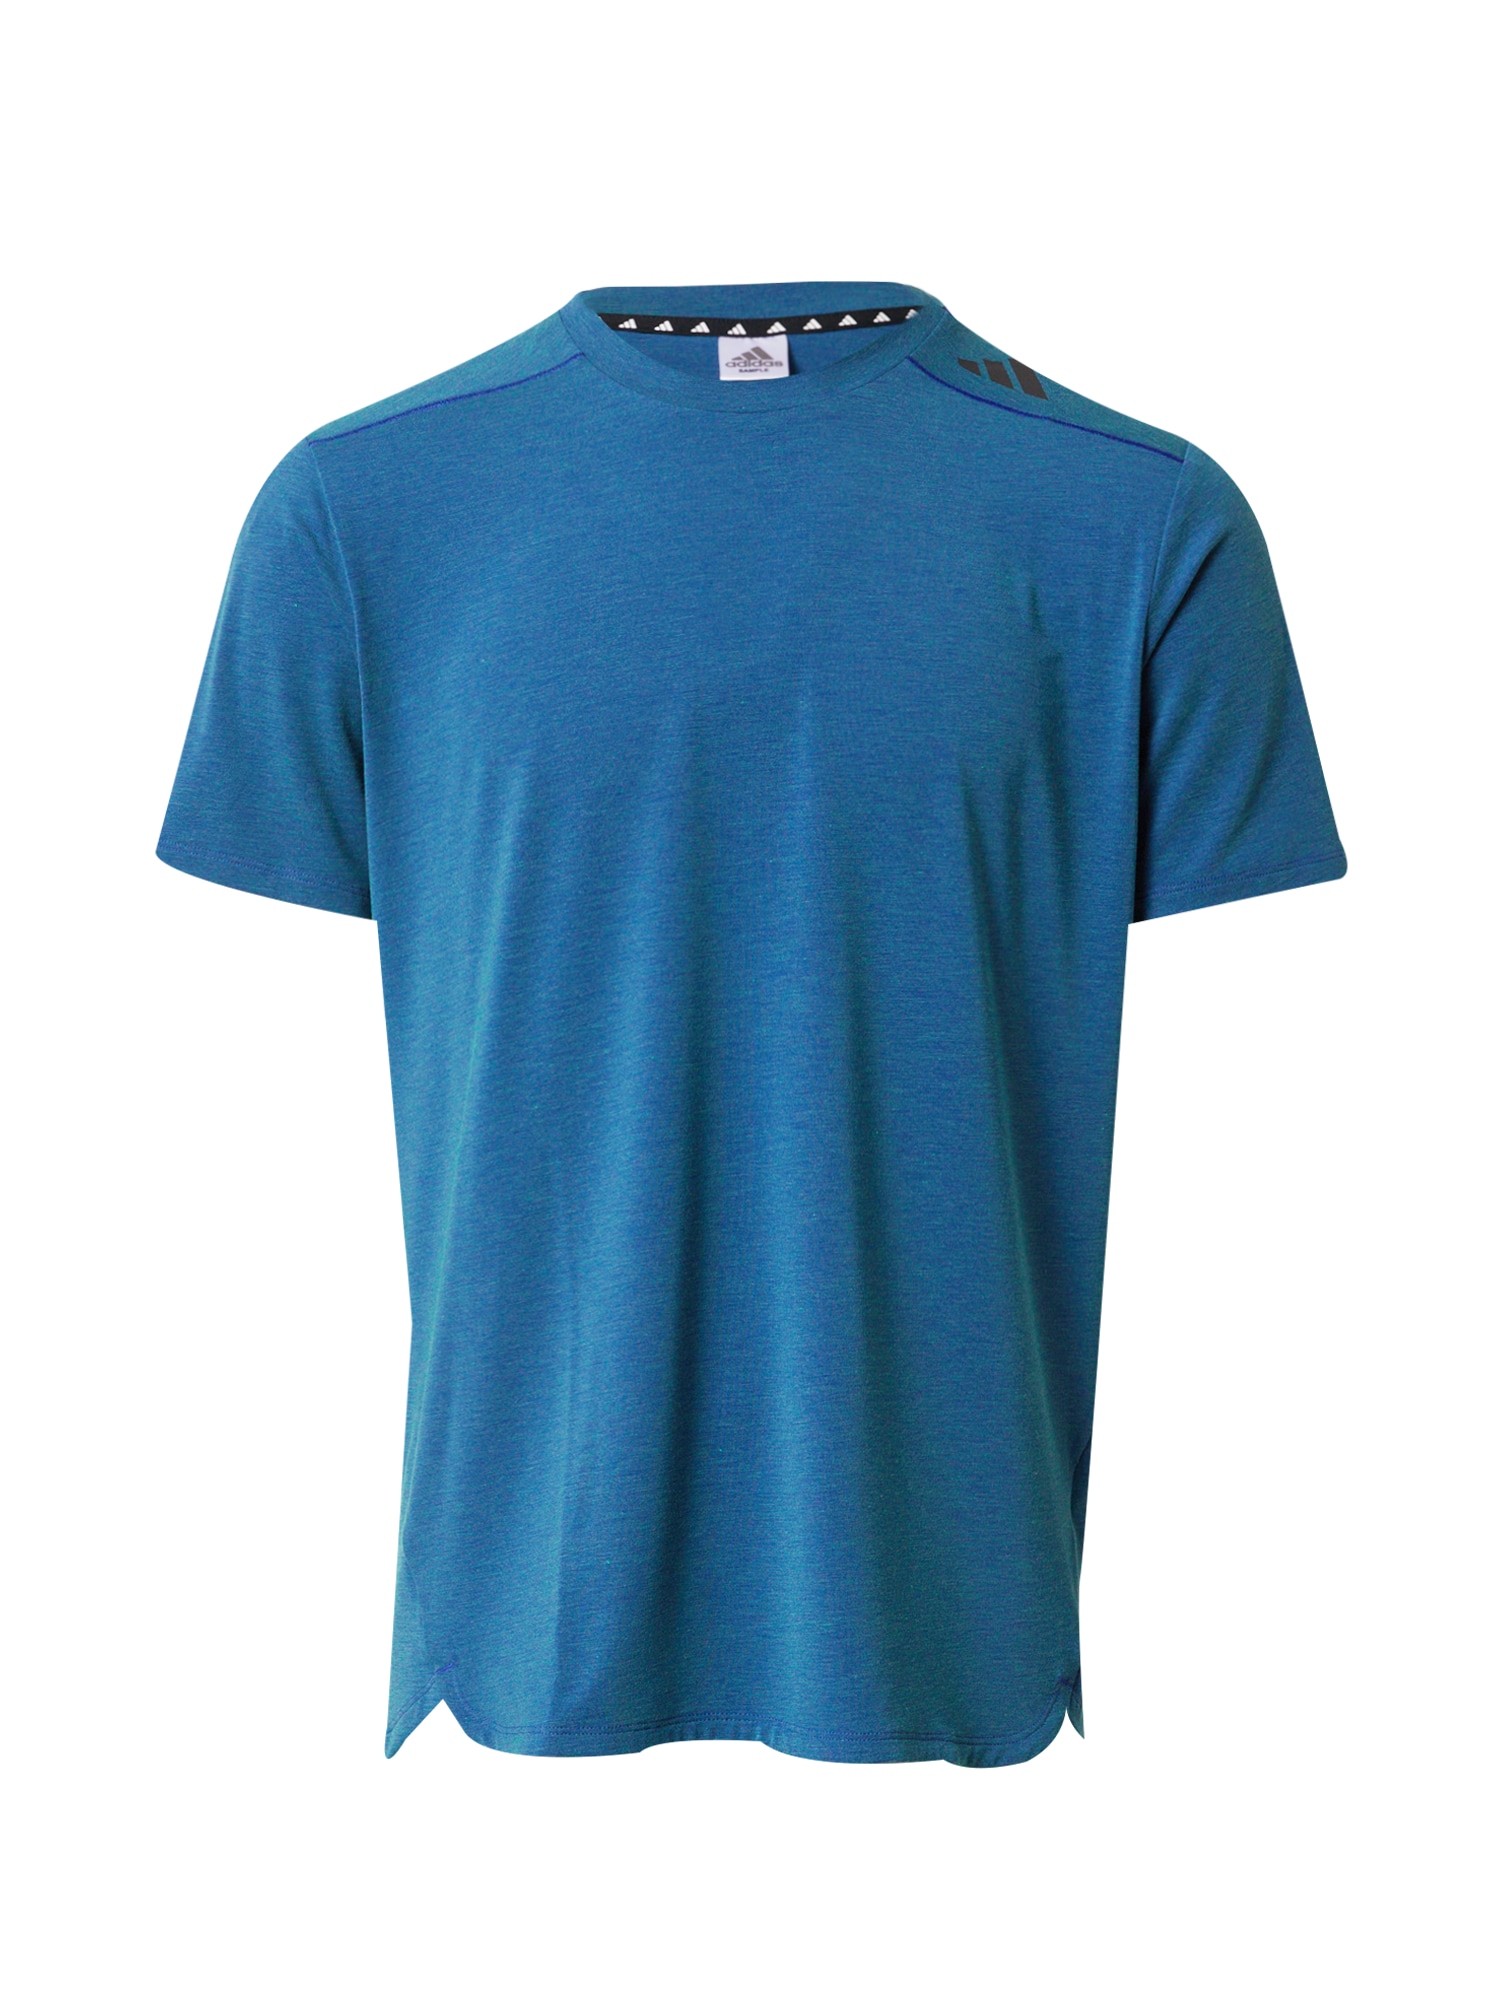 ADIDAS PERFORMANCE Funkcionalna majica  modra / marine